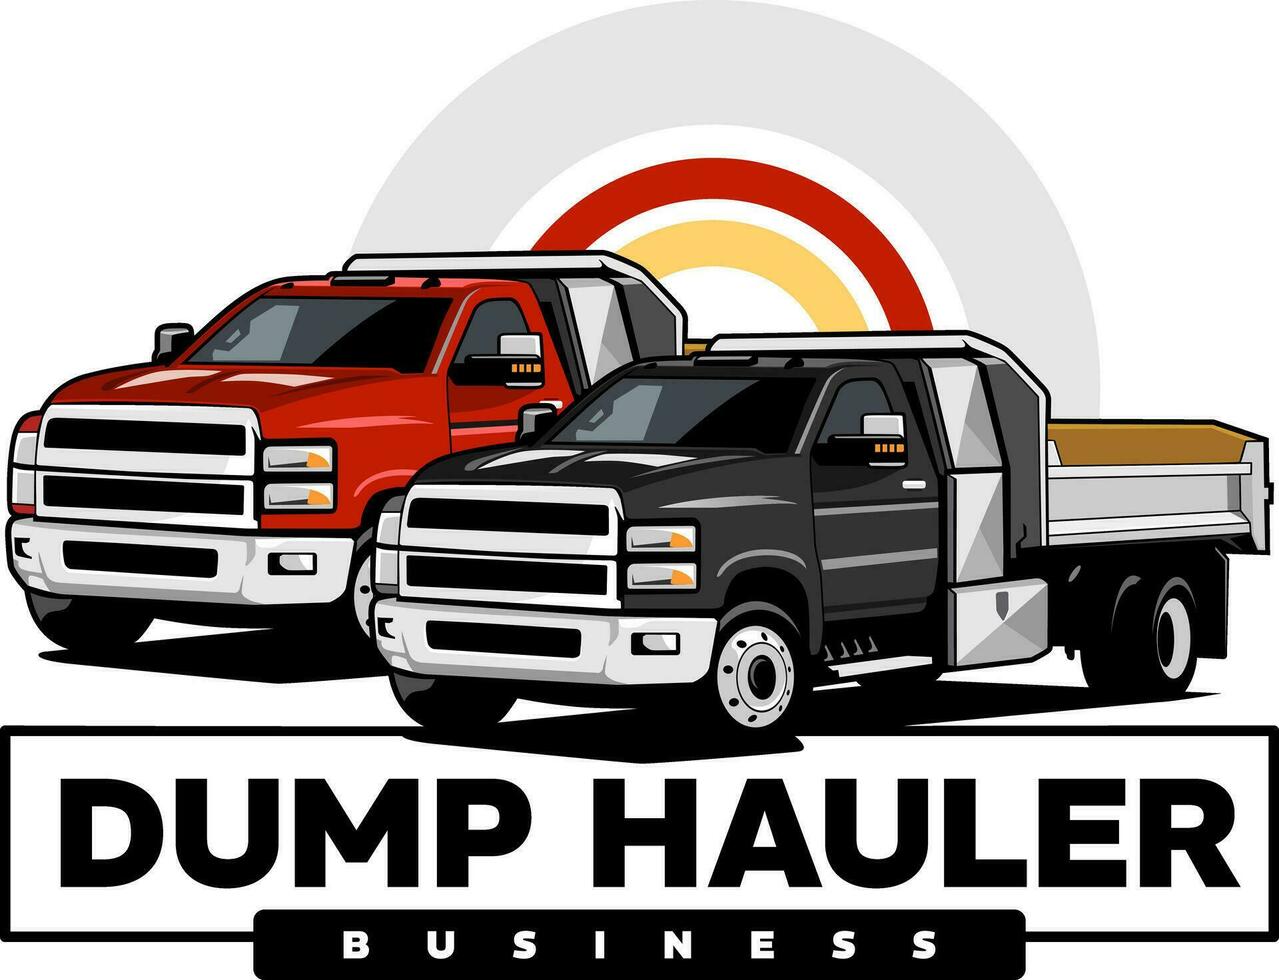 cumulo di rifiuti trasportatore trailer noleggio camion logo design vettore